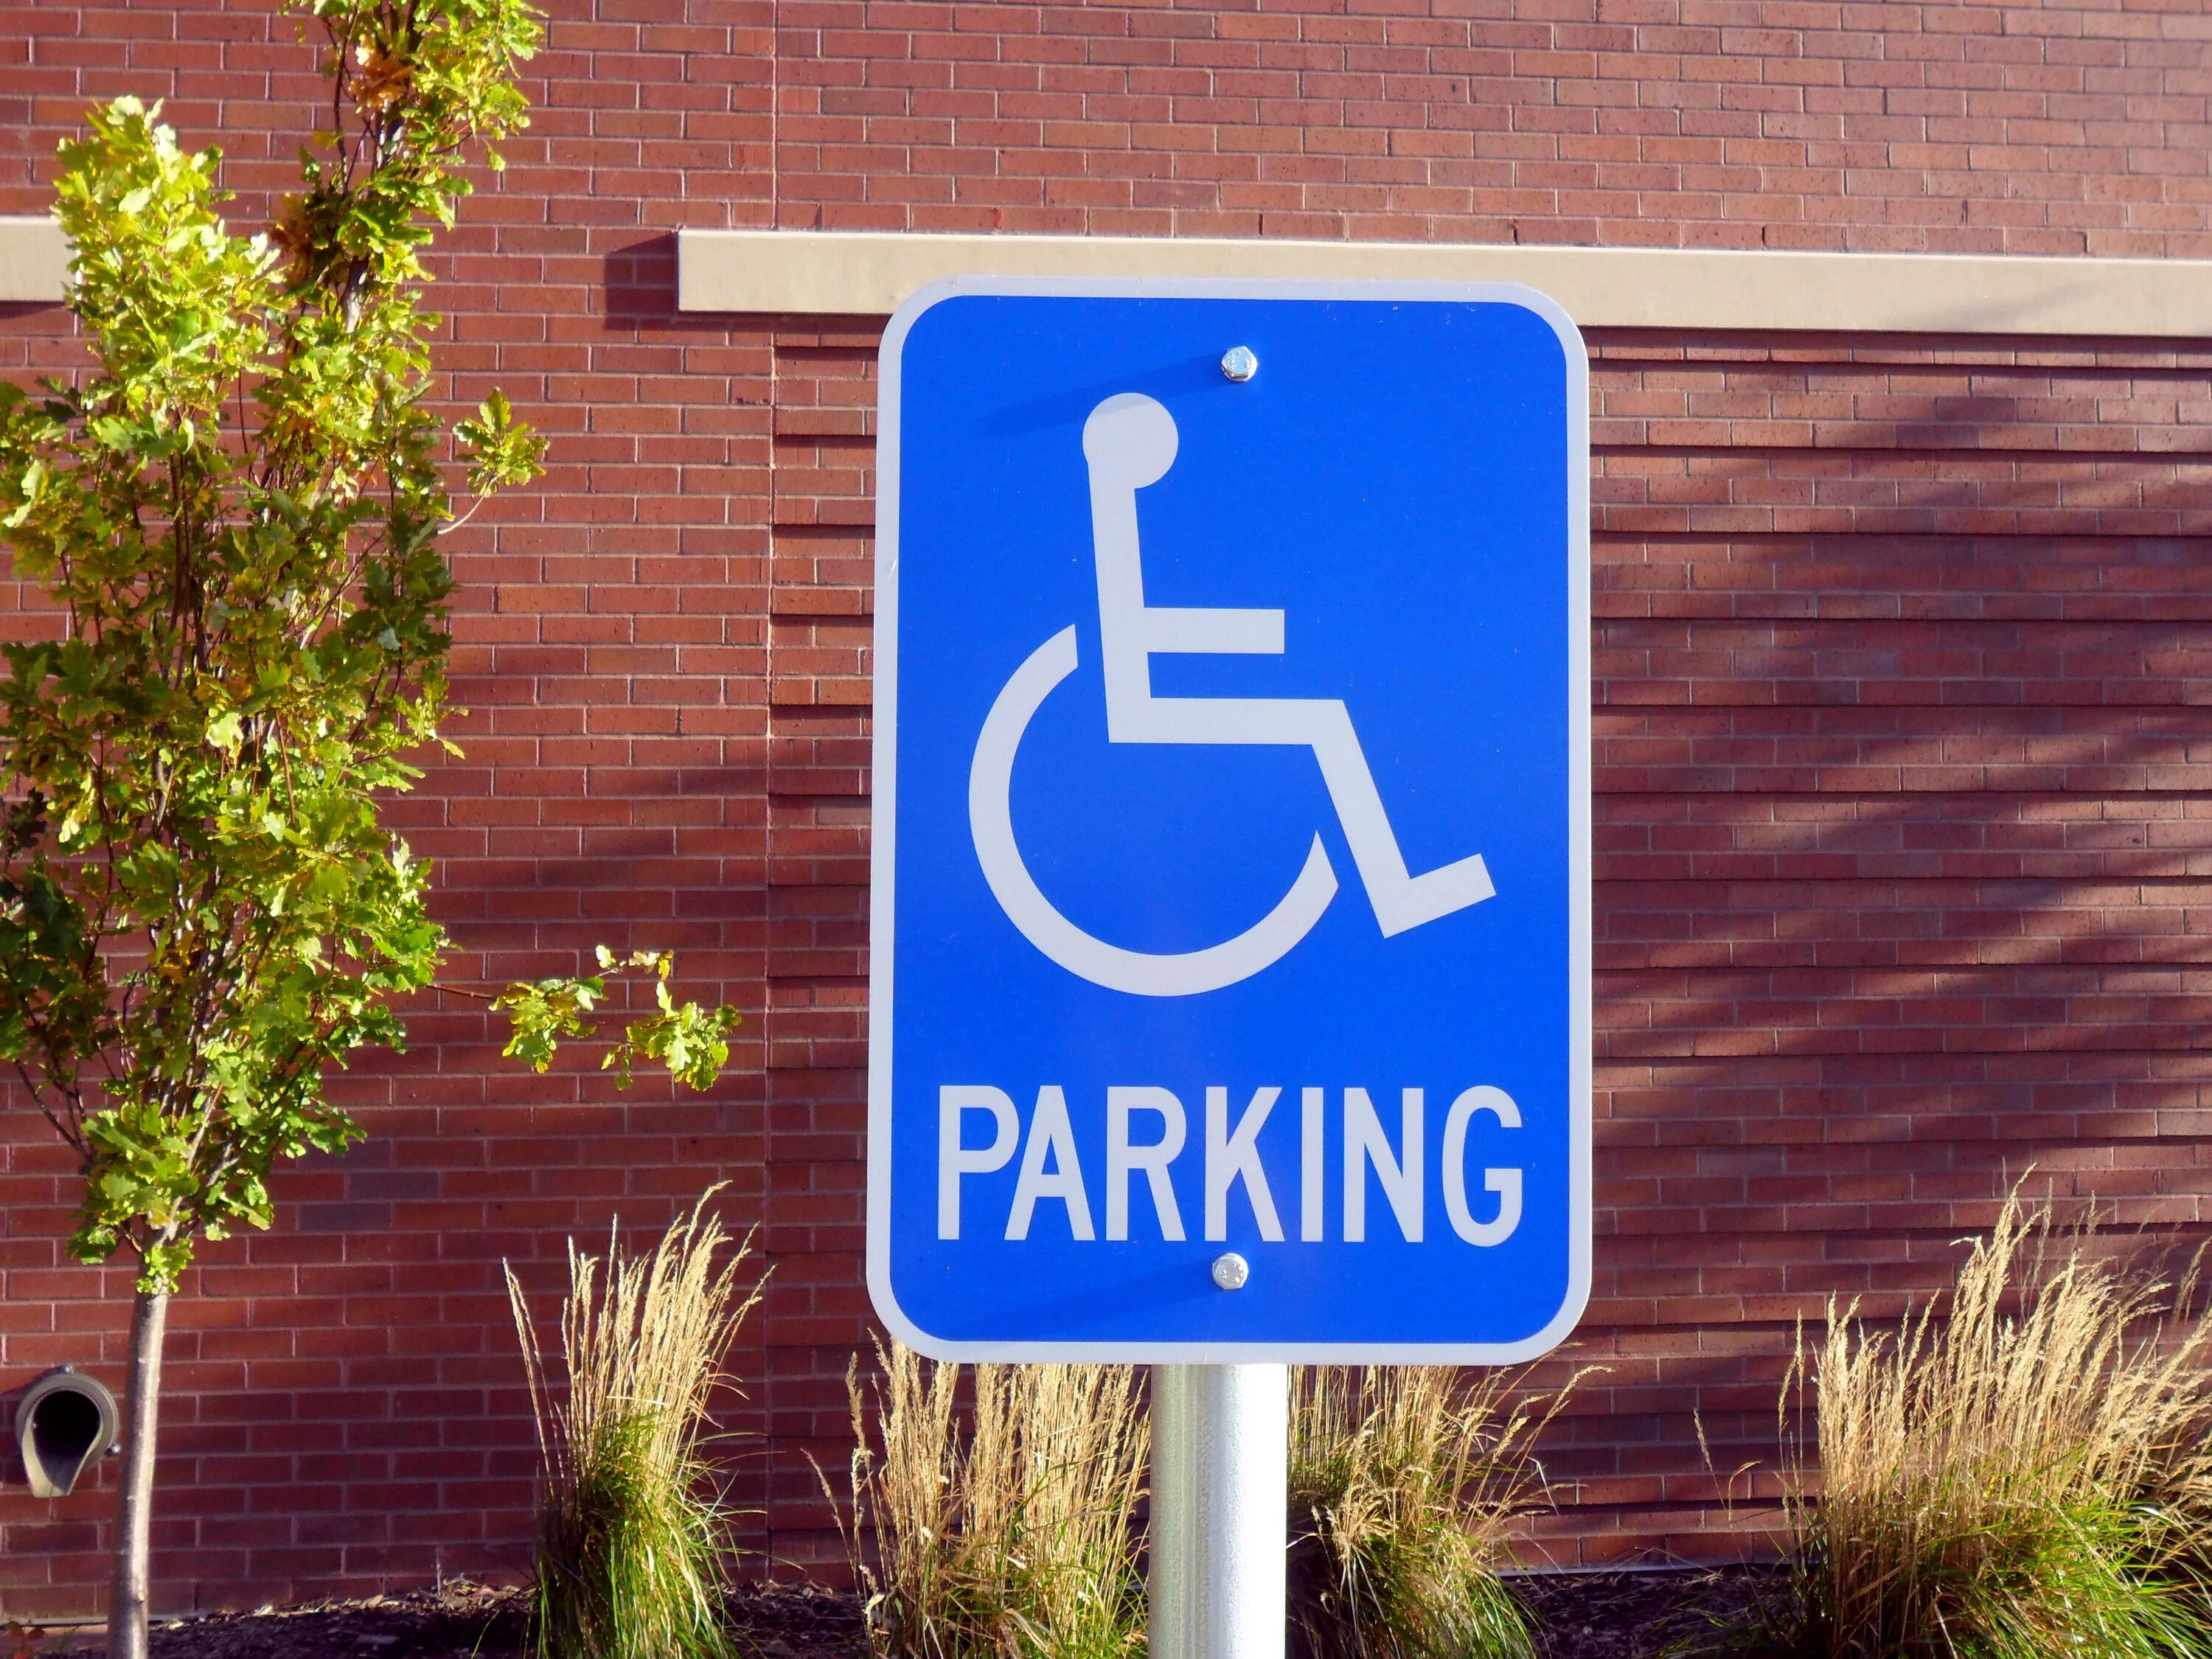 Sign save. Parking знак. Handicapped parking. Park sign. Дорожный знак паркинг с домиком.